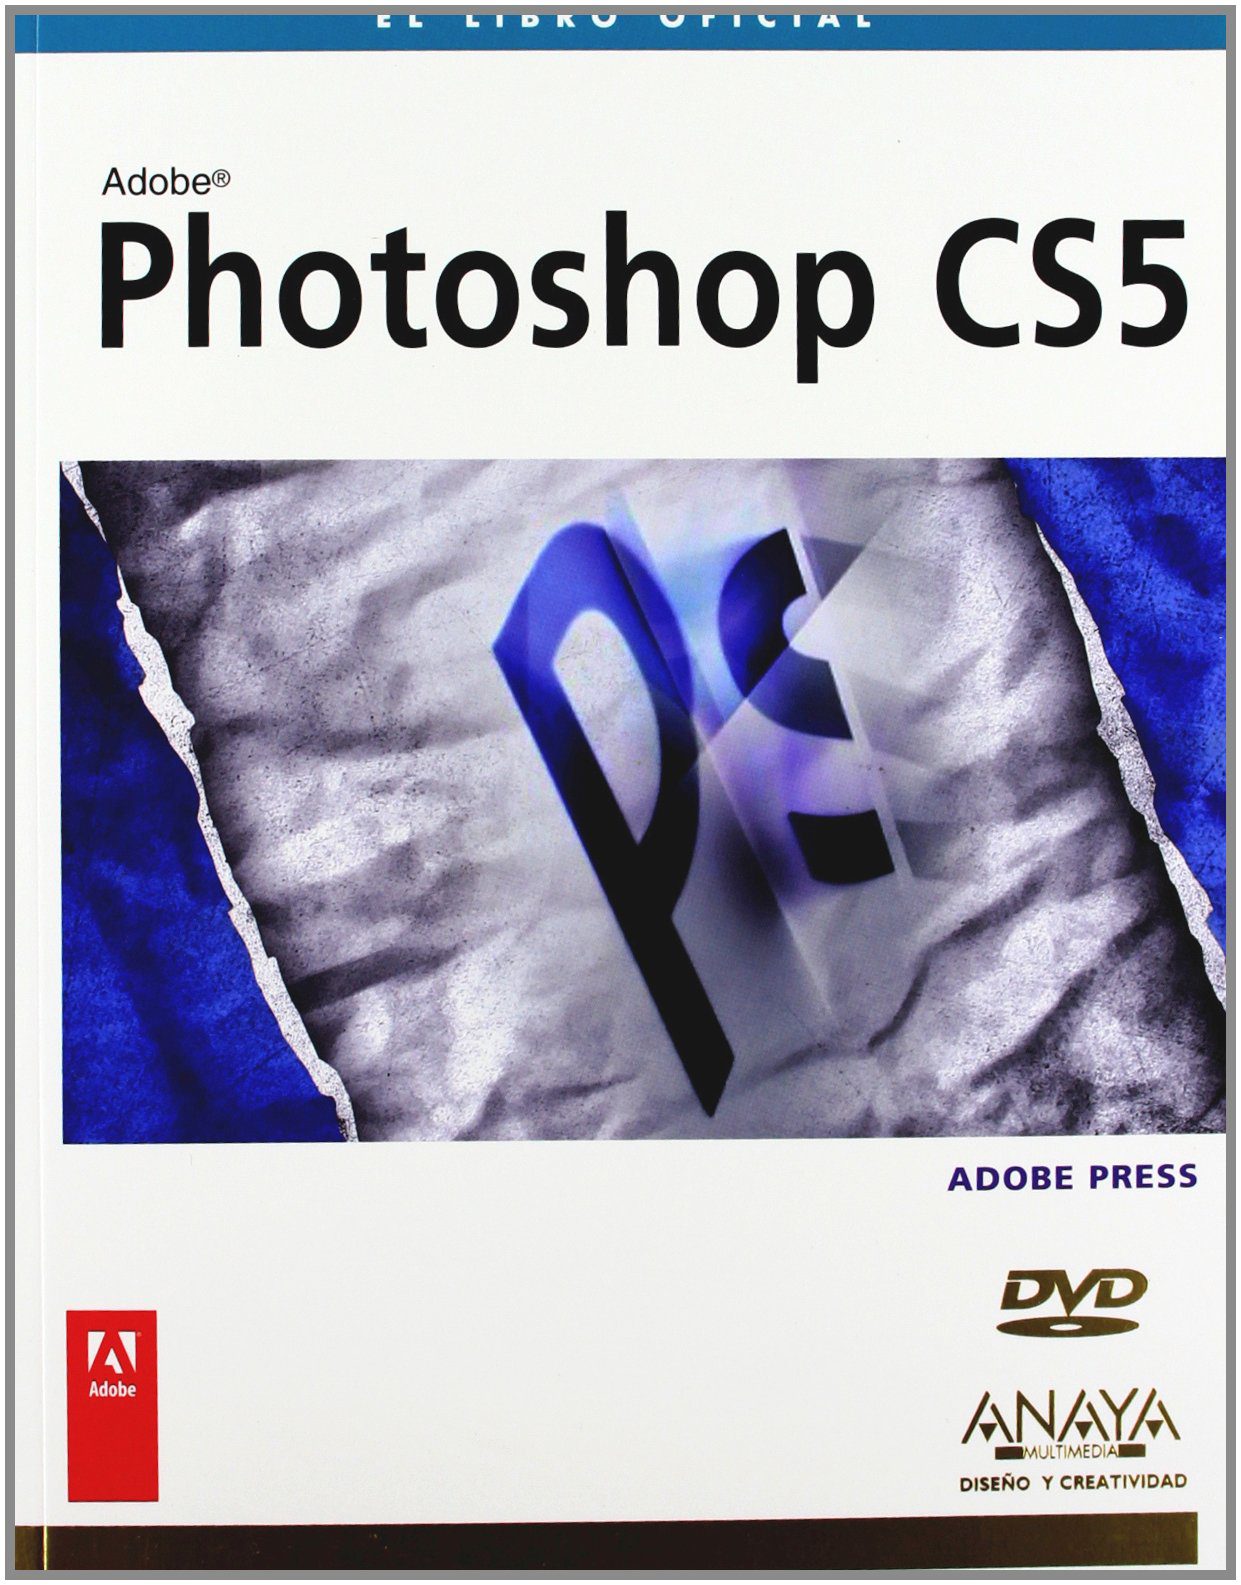 Download Adobe PhotoShop CS5 Full Version